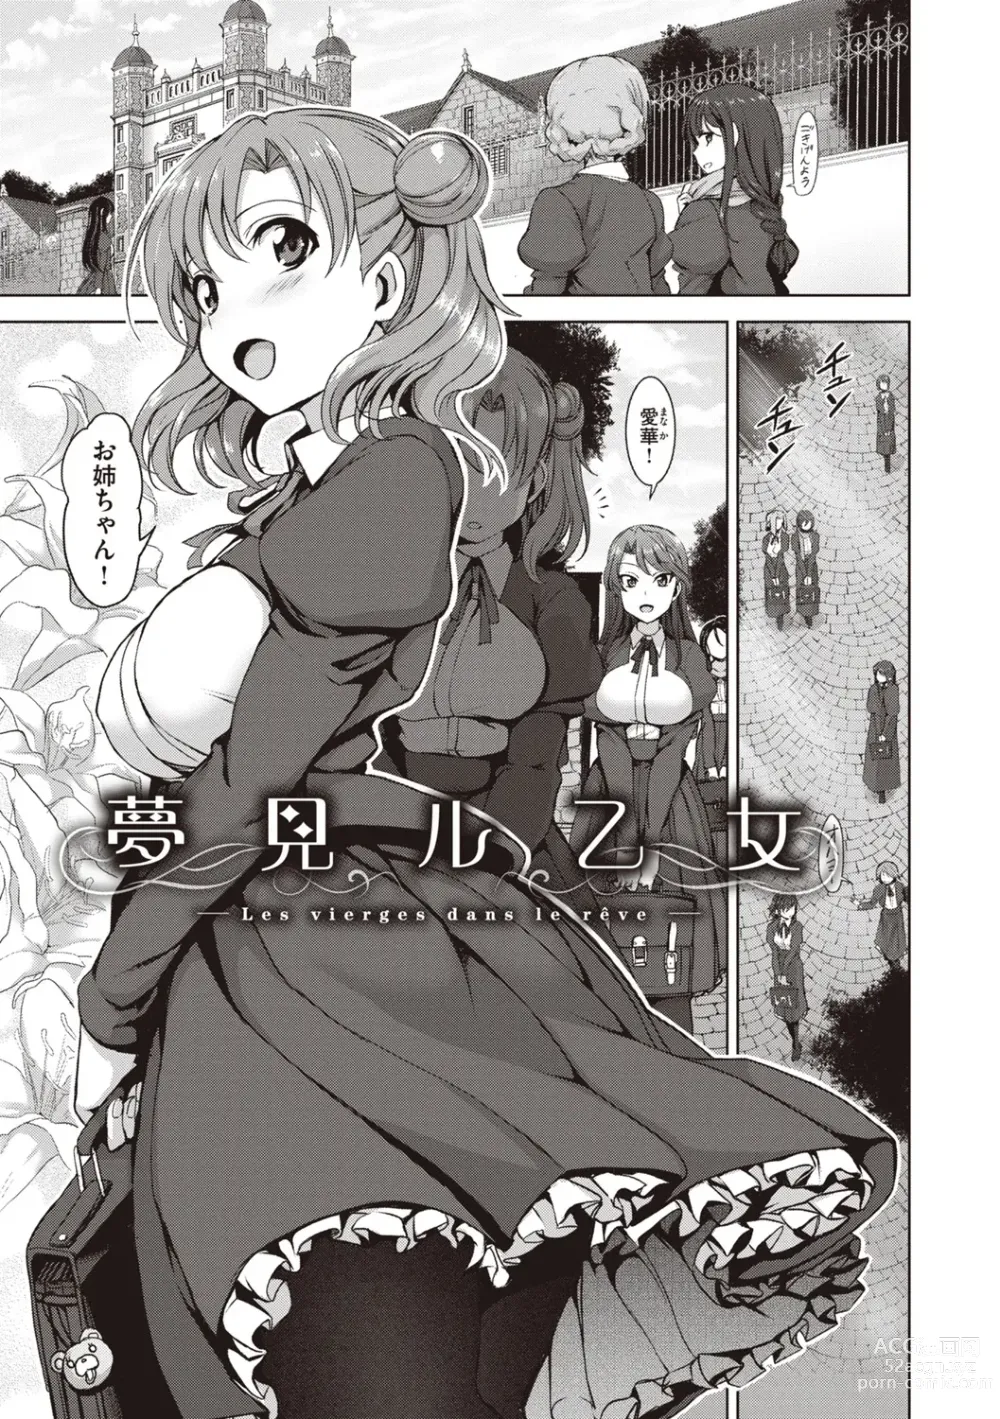 Page 11 of manga Yumemiru Otome - Les vierges dans le rêve Complete Edition